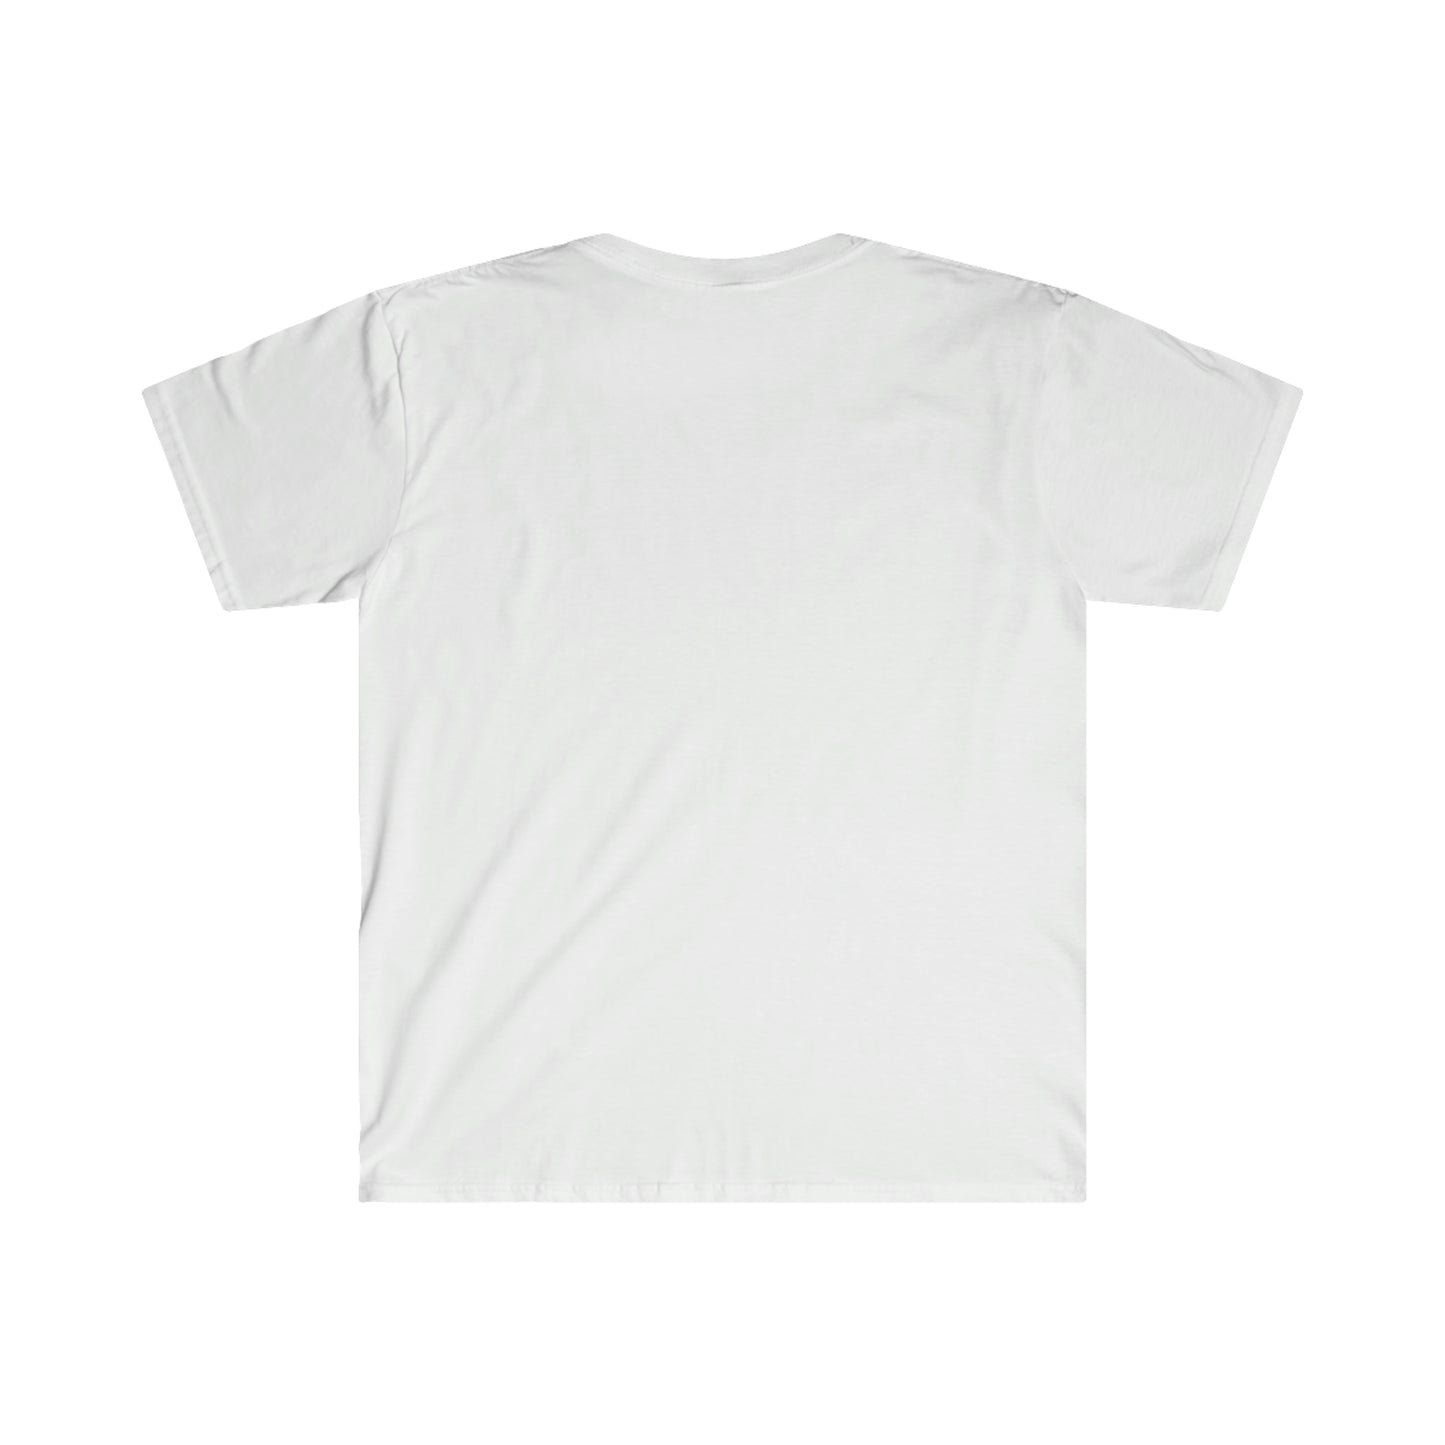 Nature & Sh*t- Unisex Softstyle T-Shirt